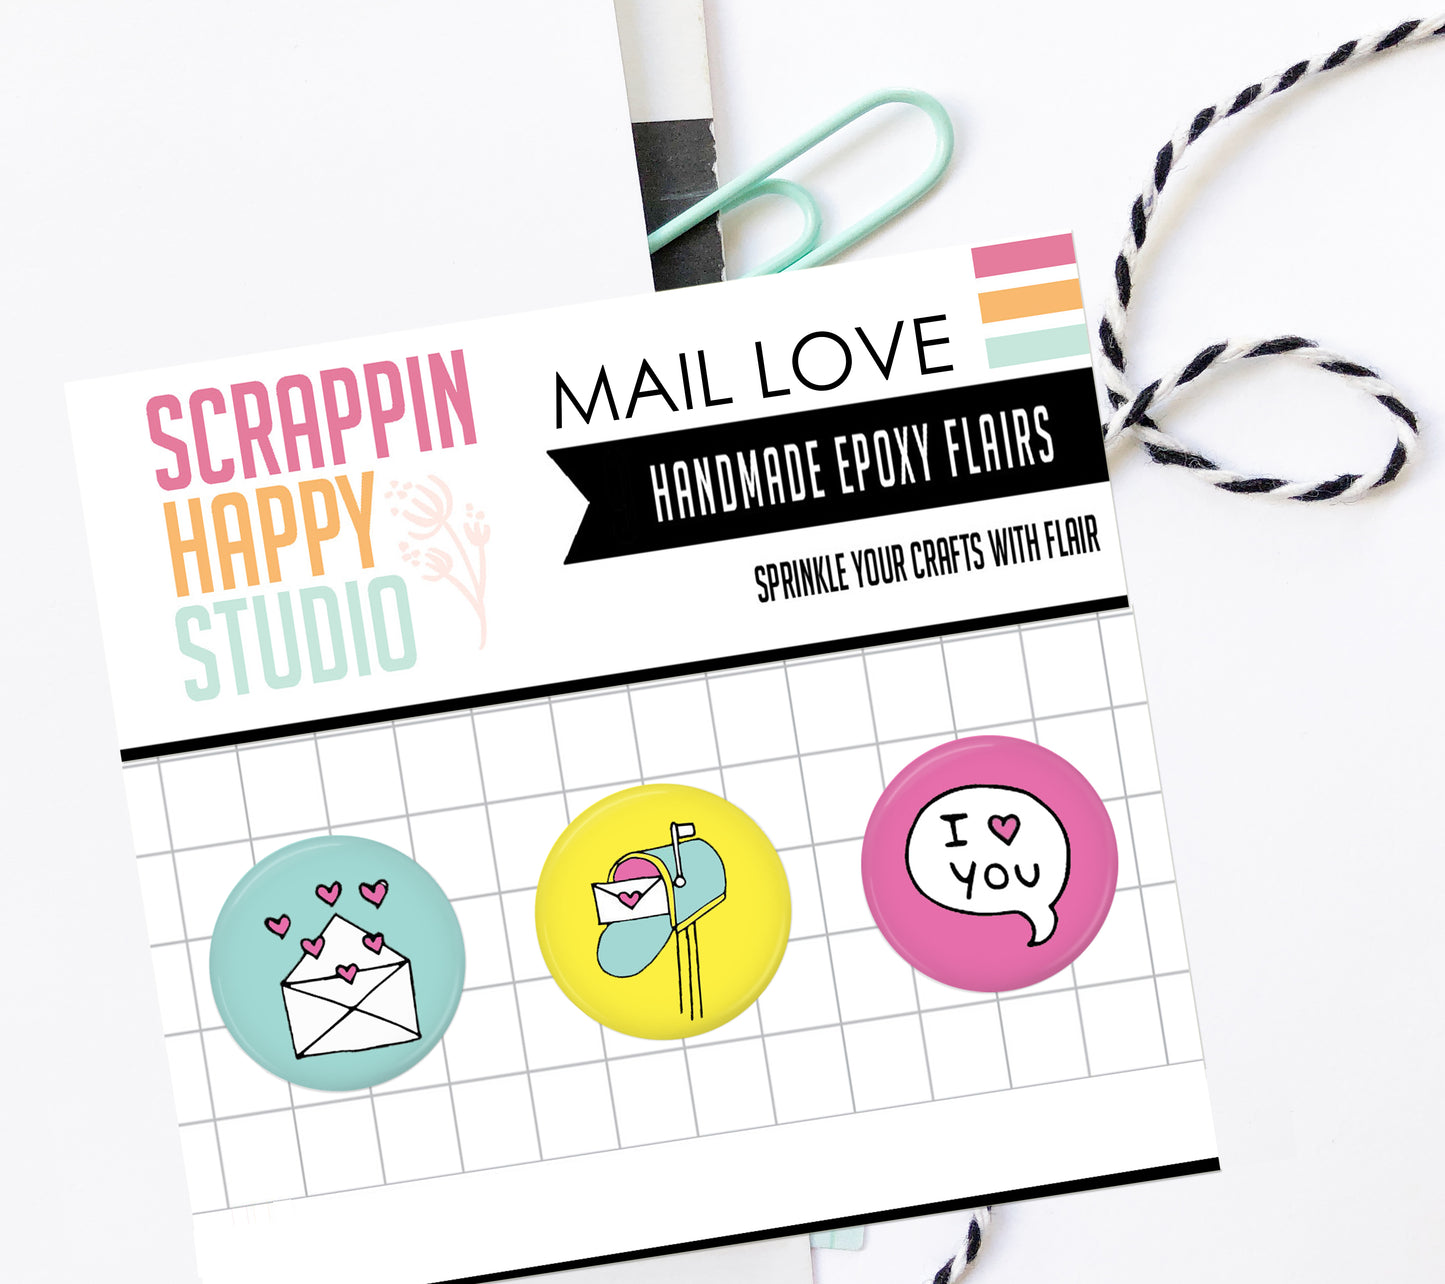 Mail Love Epoxy Flair